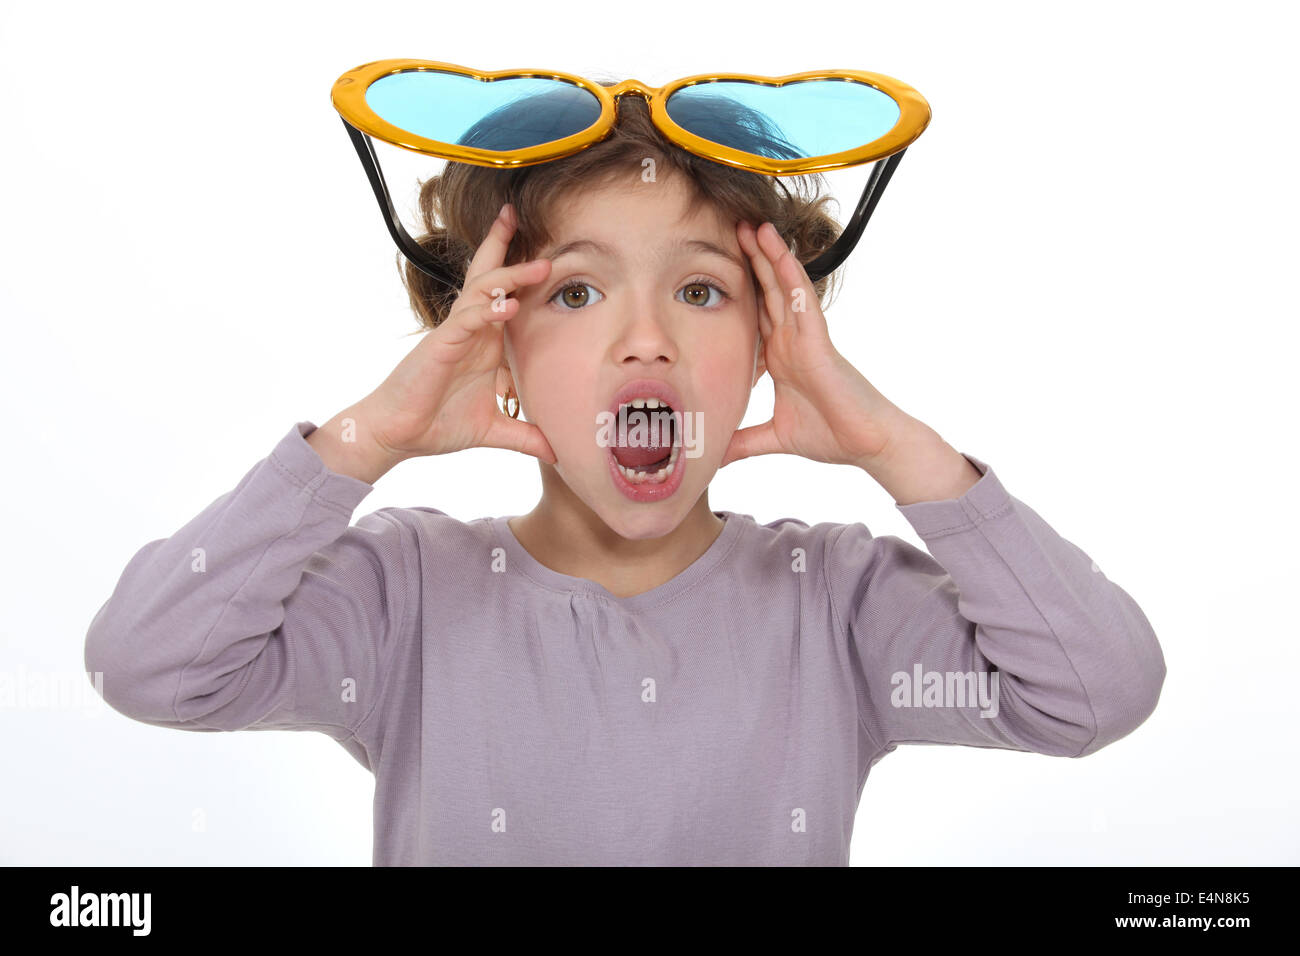 Shocked little girl wearing comedy glasses Stock Photo